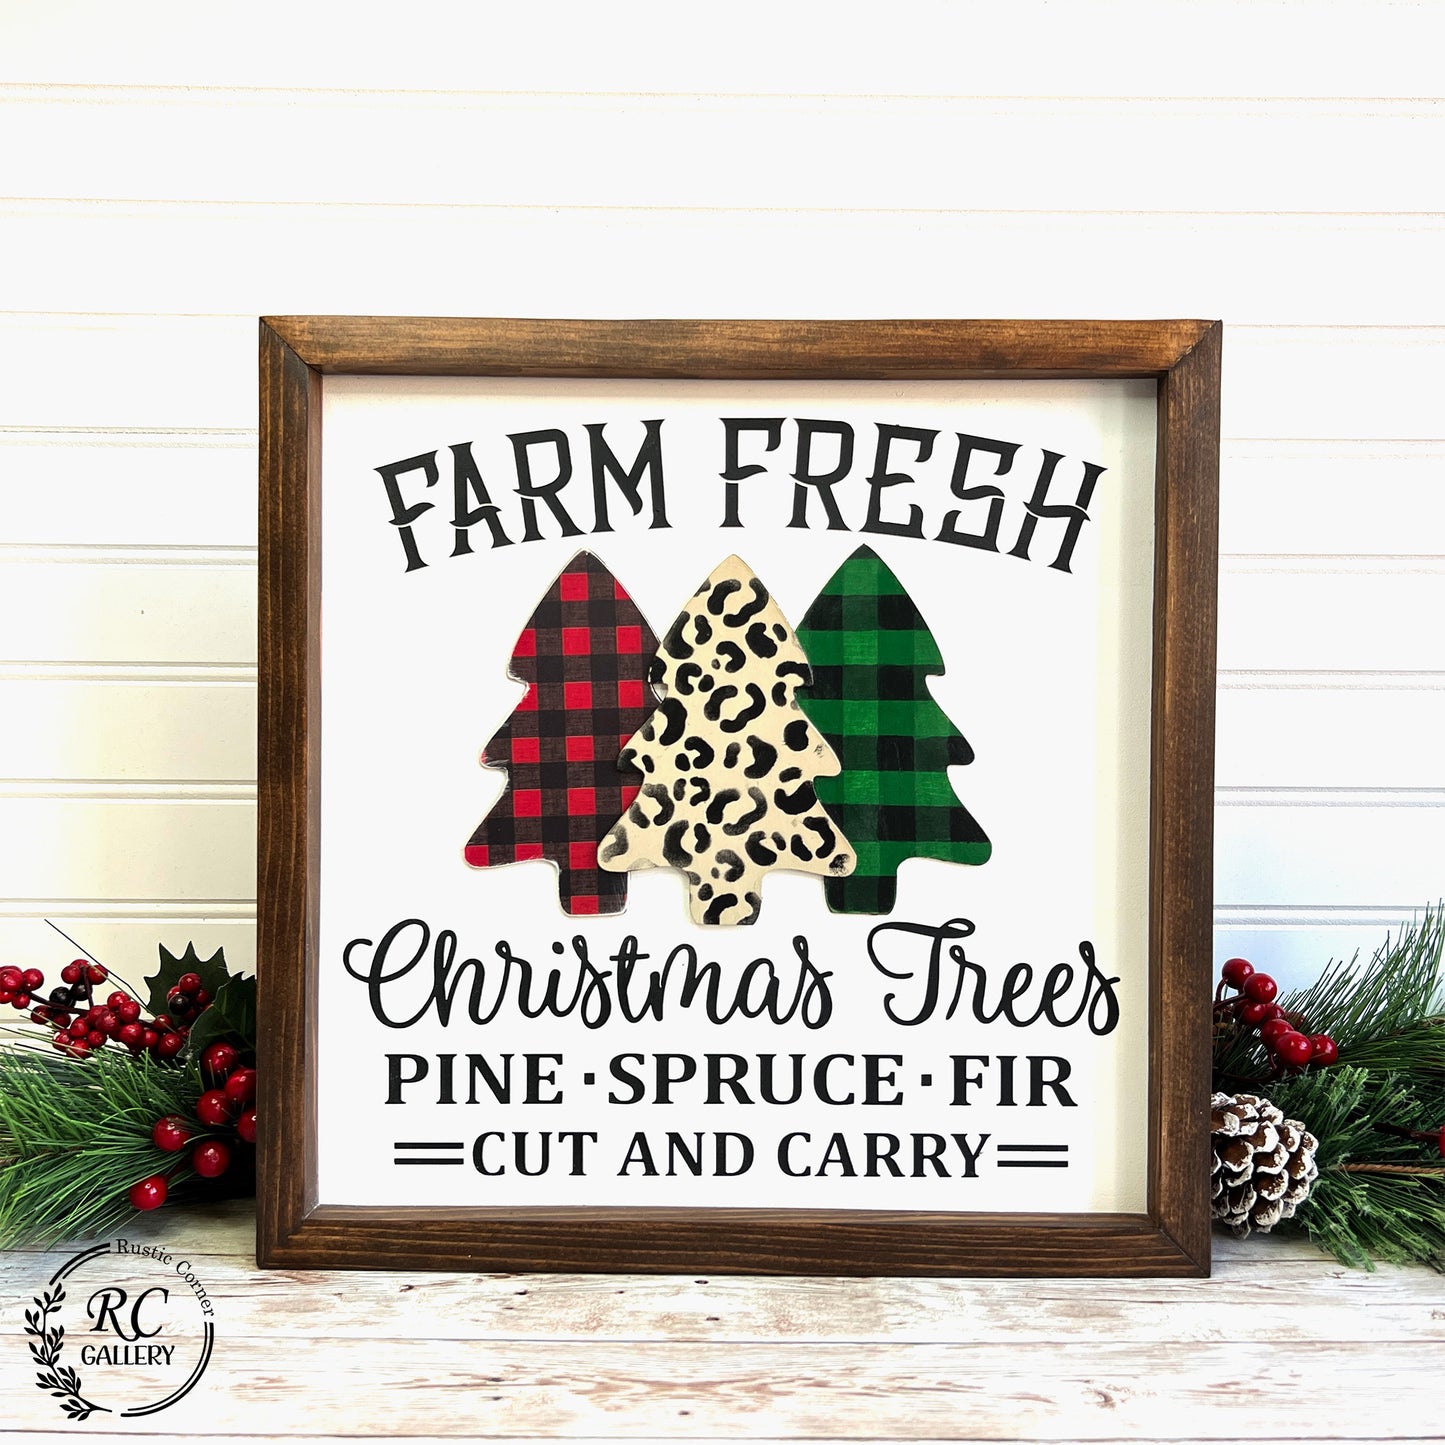 Farm fresh Christmas trees, Christmas wood sign.